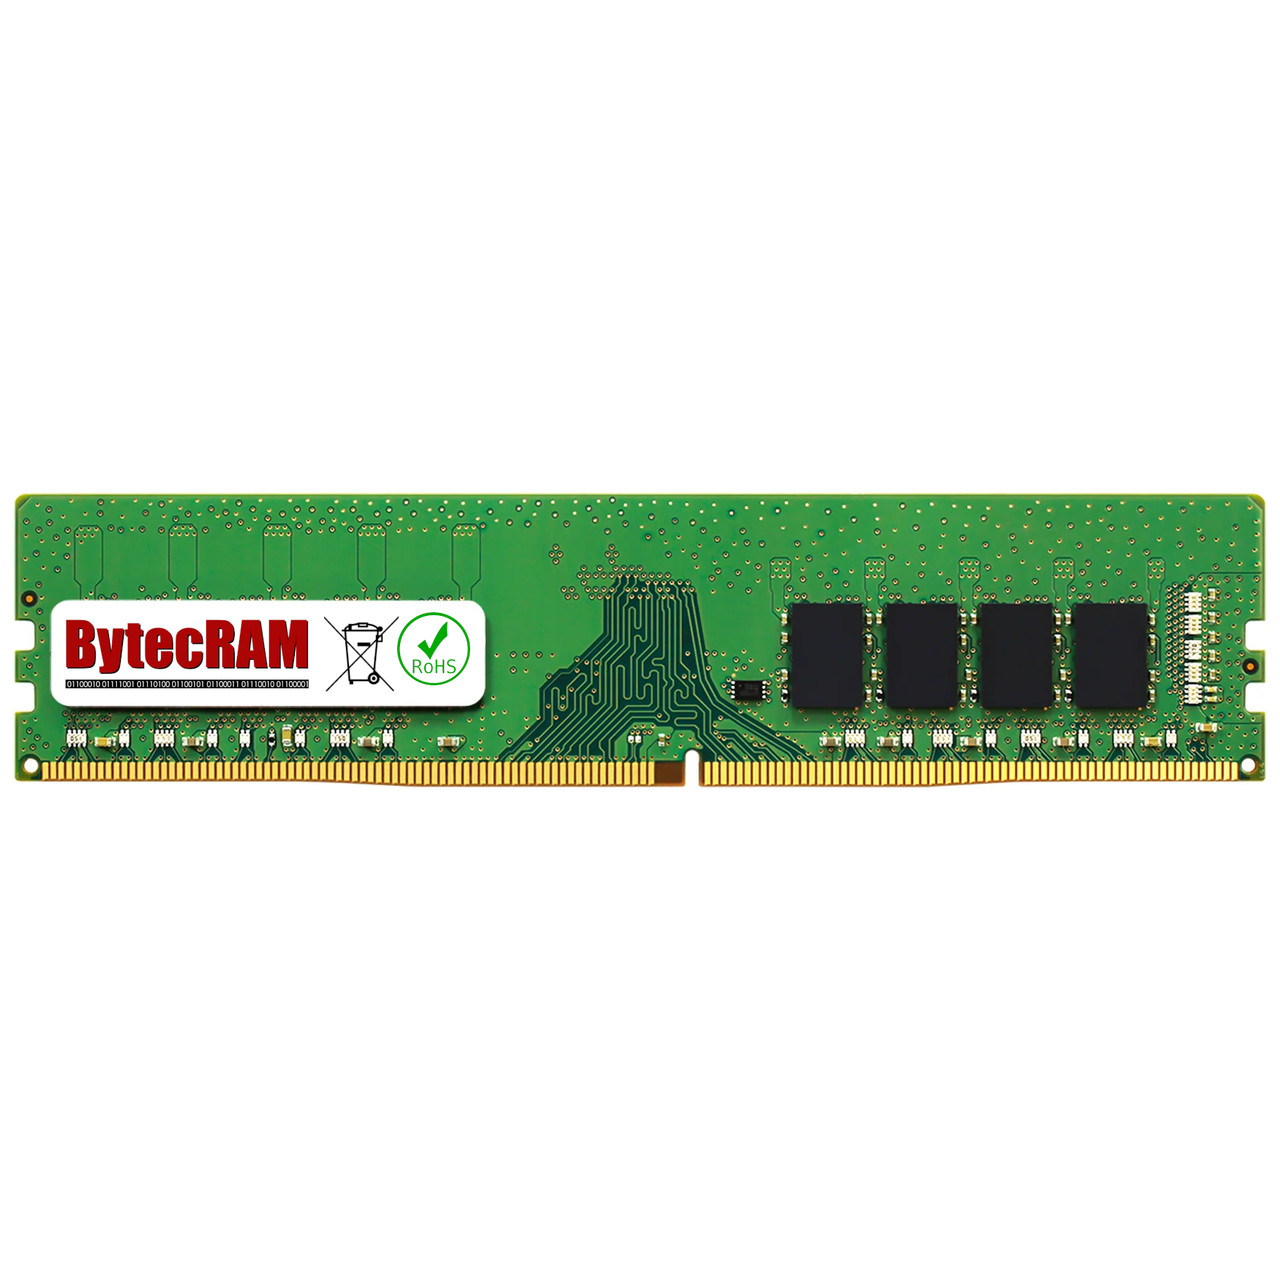 eBay*16GB HP Slim S01-aF0004nd DDR4 3200MHz UDIMM Memory RAM Upgrade